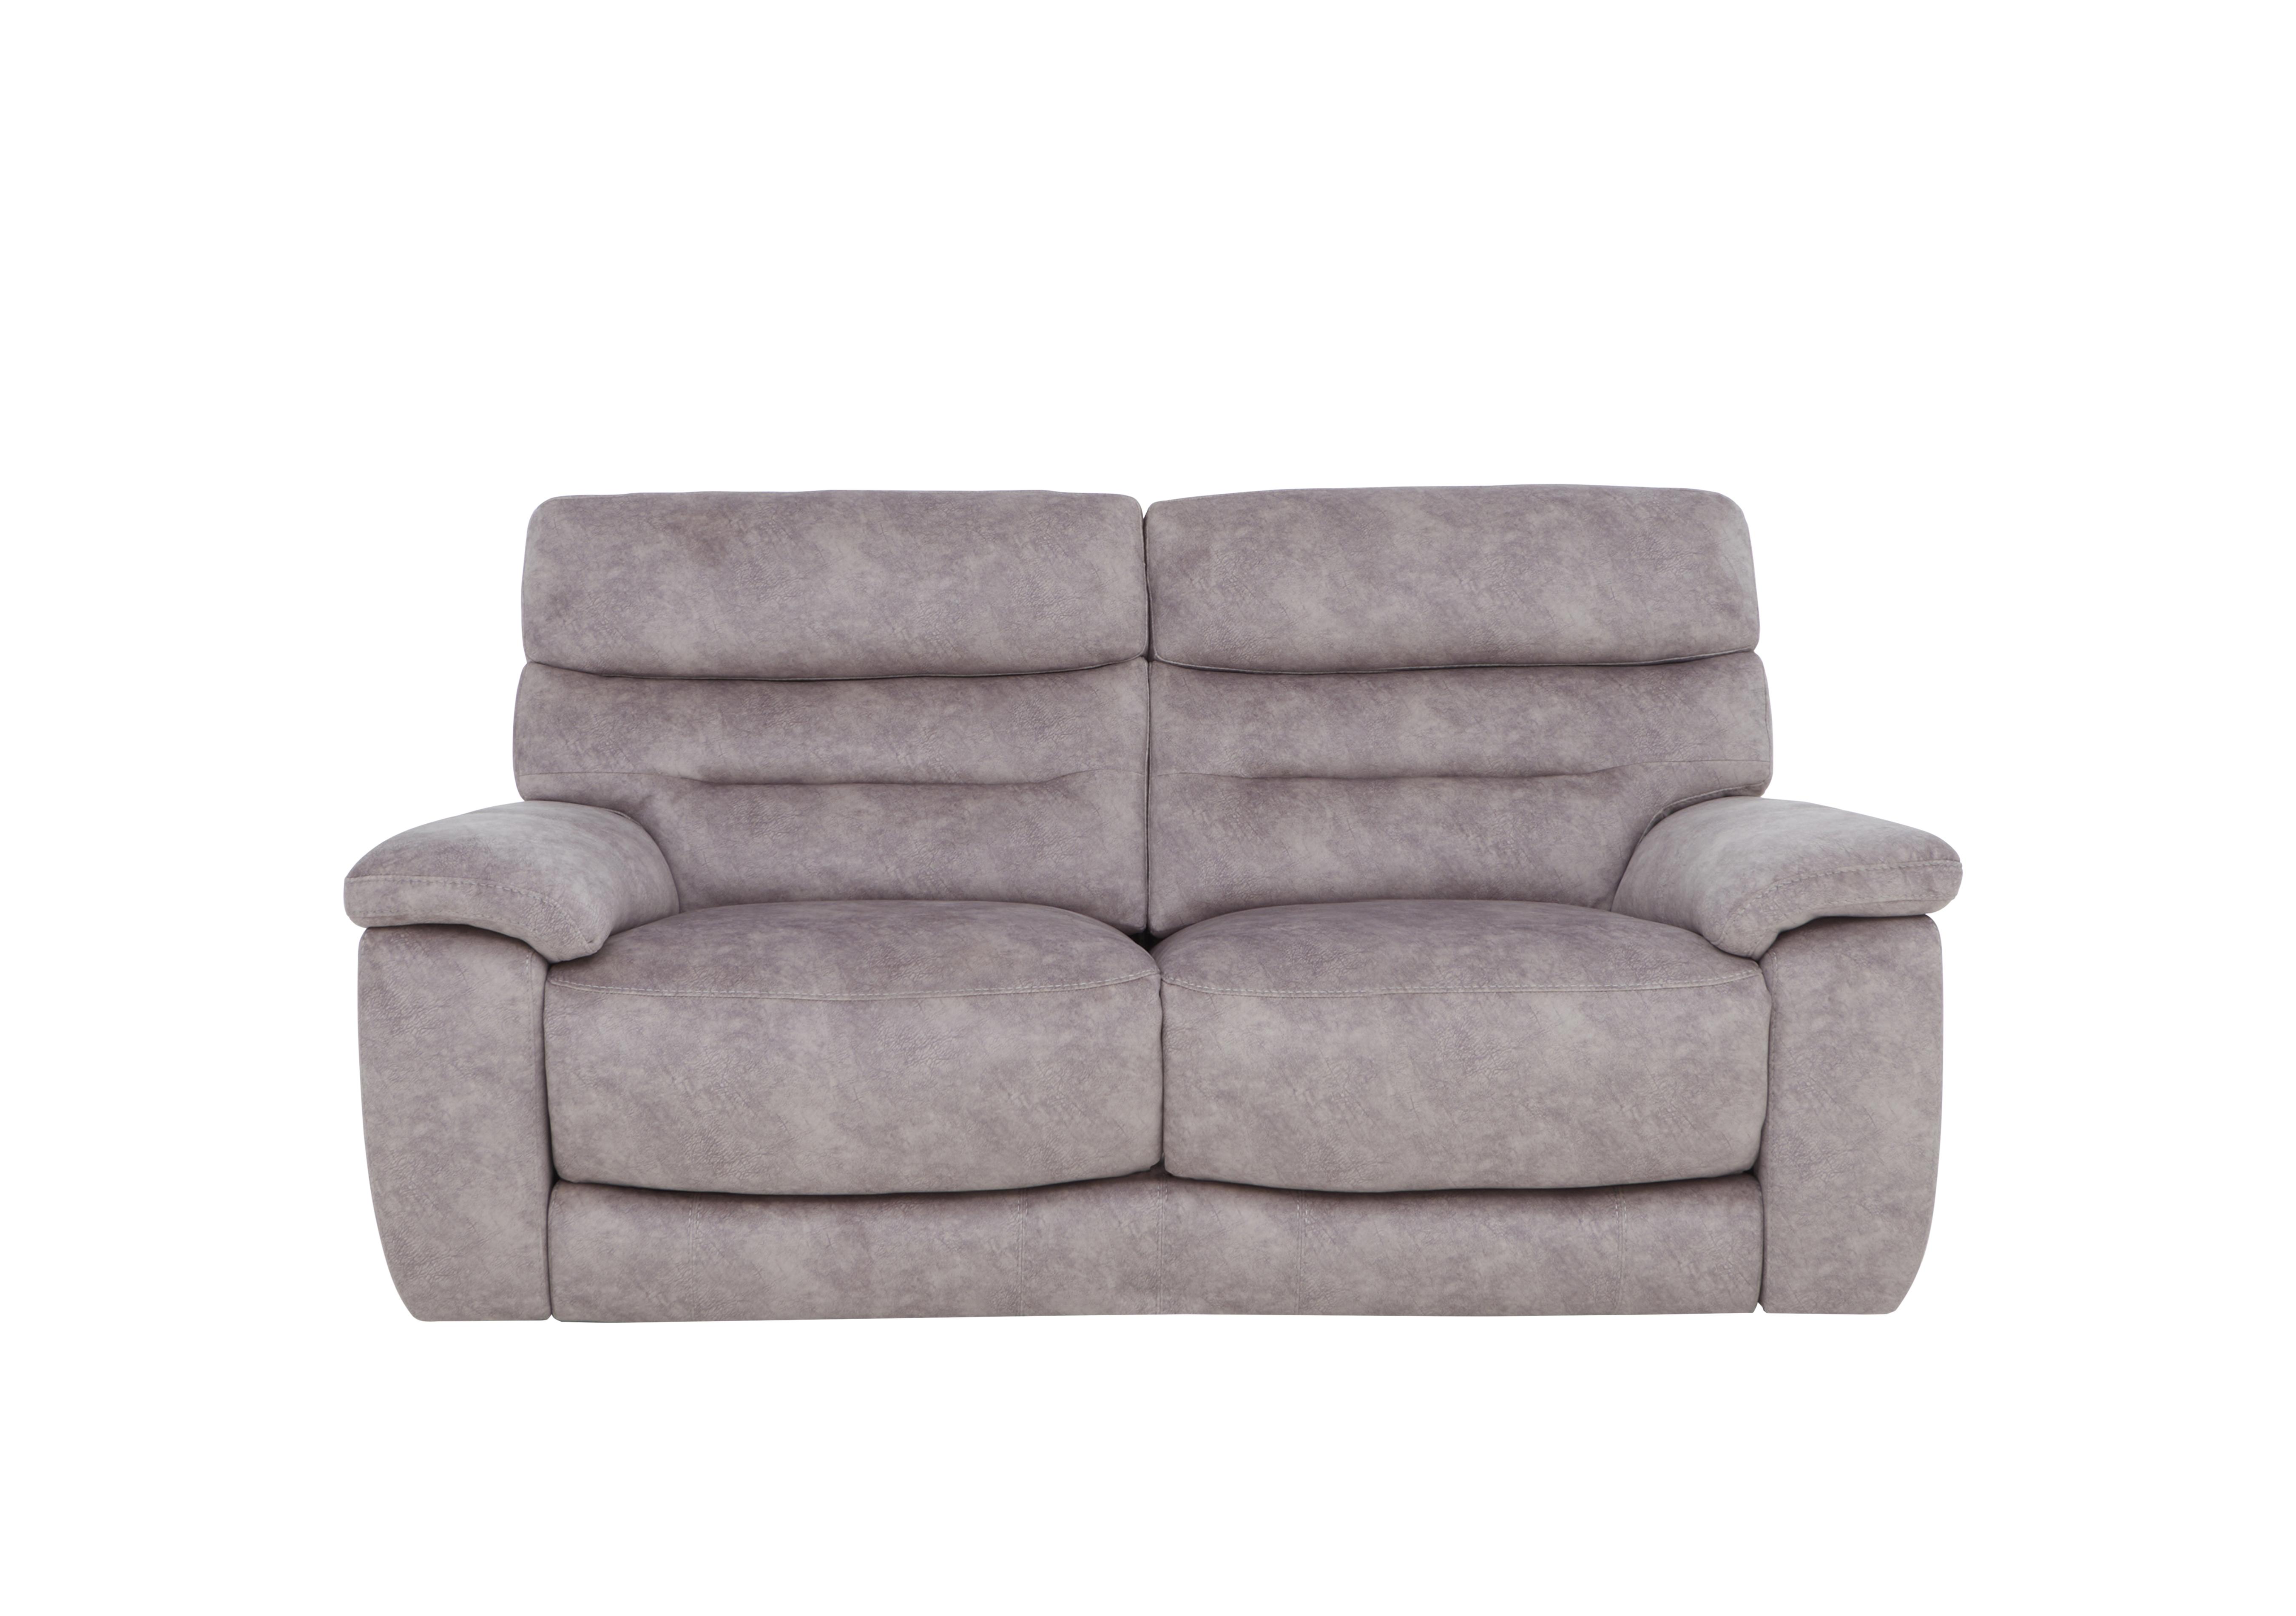 Nimbus 2 Seater Fabric Sofa in Bfa-Bnn-R28 Grey on Furniture Village